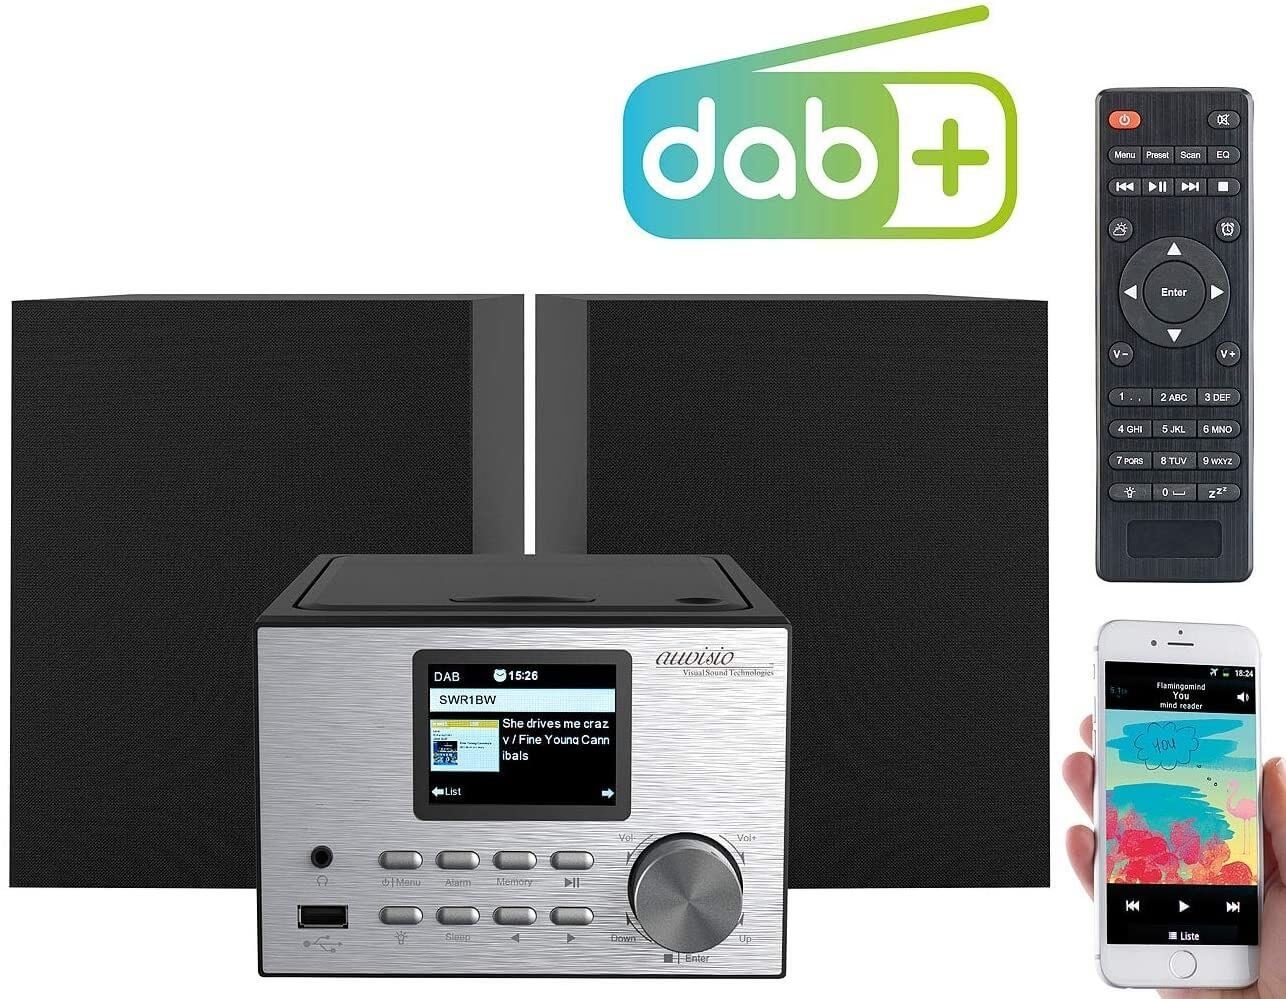 USB, W, CD, mit DAB+, mit FM/DAB+, Stereoanlage Webradio, Bluetooth 30 2.1 Micro-Stereoanlage auvisio IRS-500.mini CD-Player) System FM, (DAB), FM, (Digitalradio